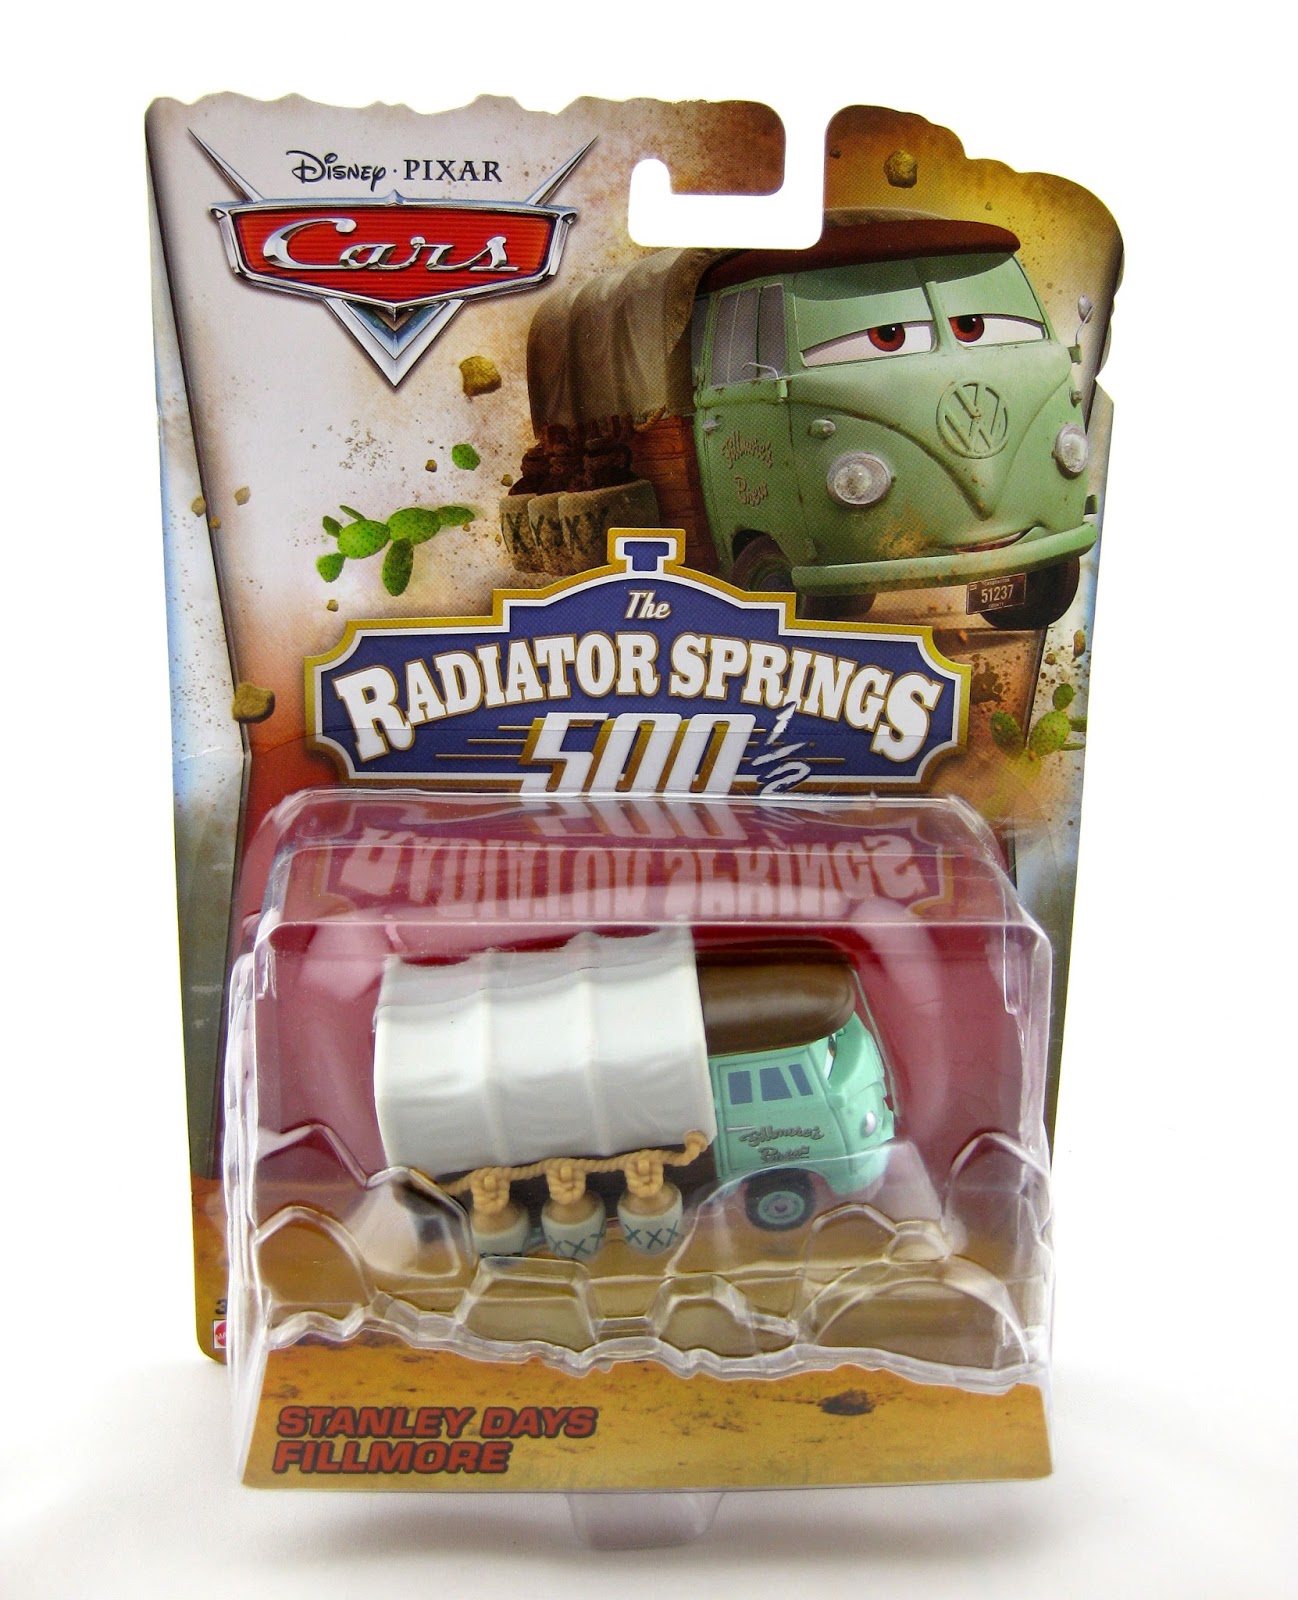 Stanley Days Fillmore Die-Cast Vehicle for sale online The Radiator Springs 500 1/2 Mattel Disney Pixar Cars 